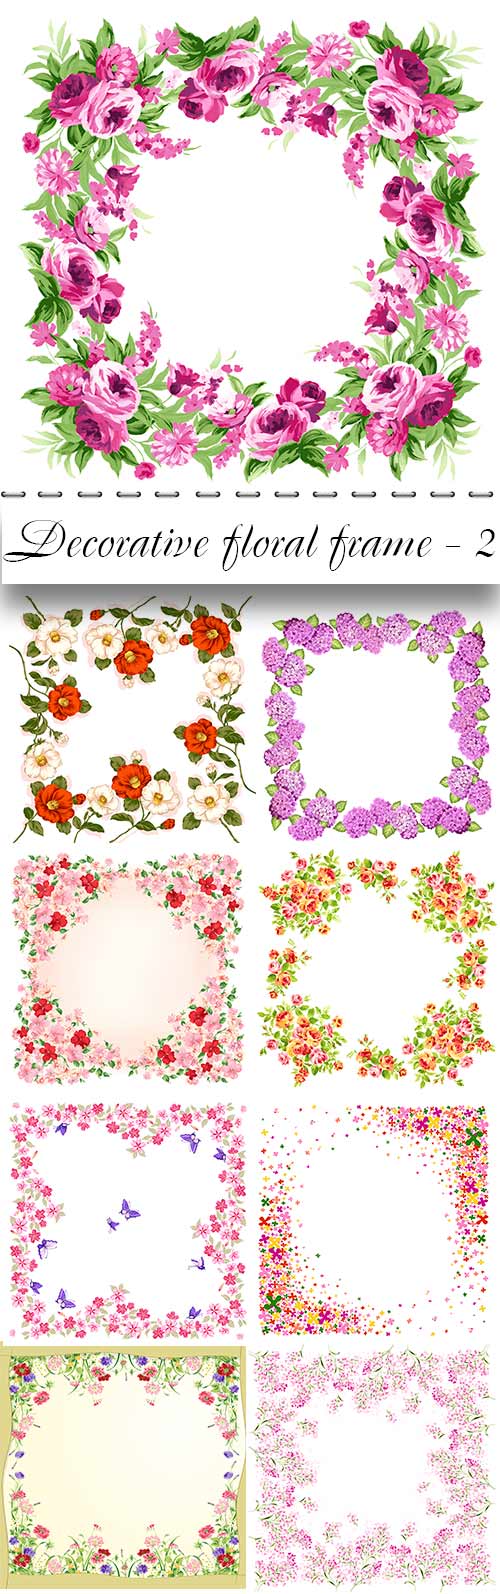 Decorative floral frame  PSD - 2м